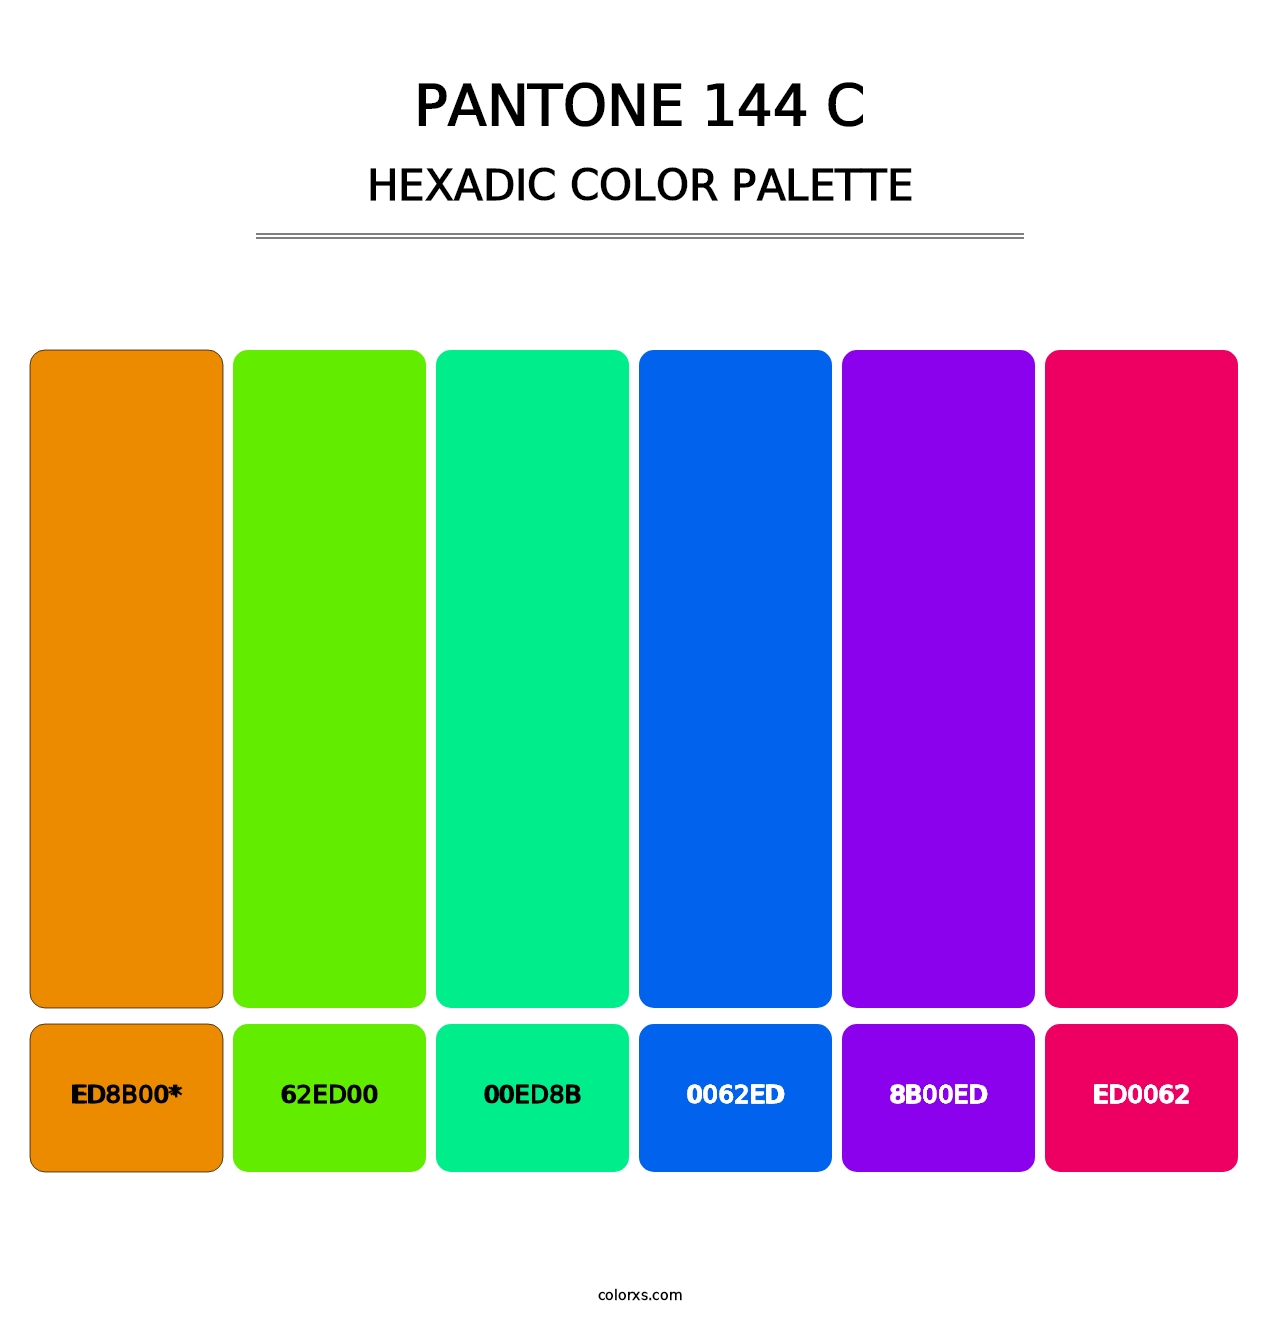 PANTONE 144 C - Hexadic Color Palette